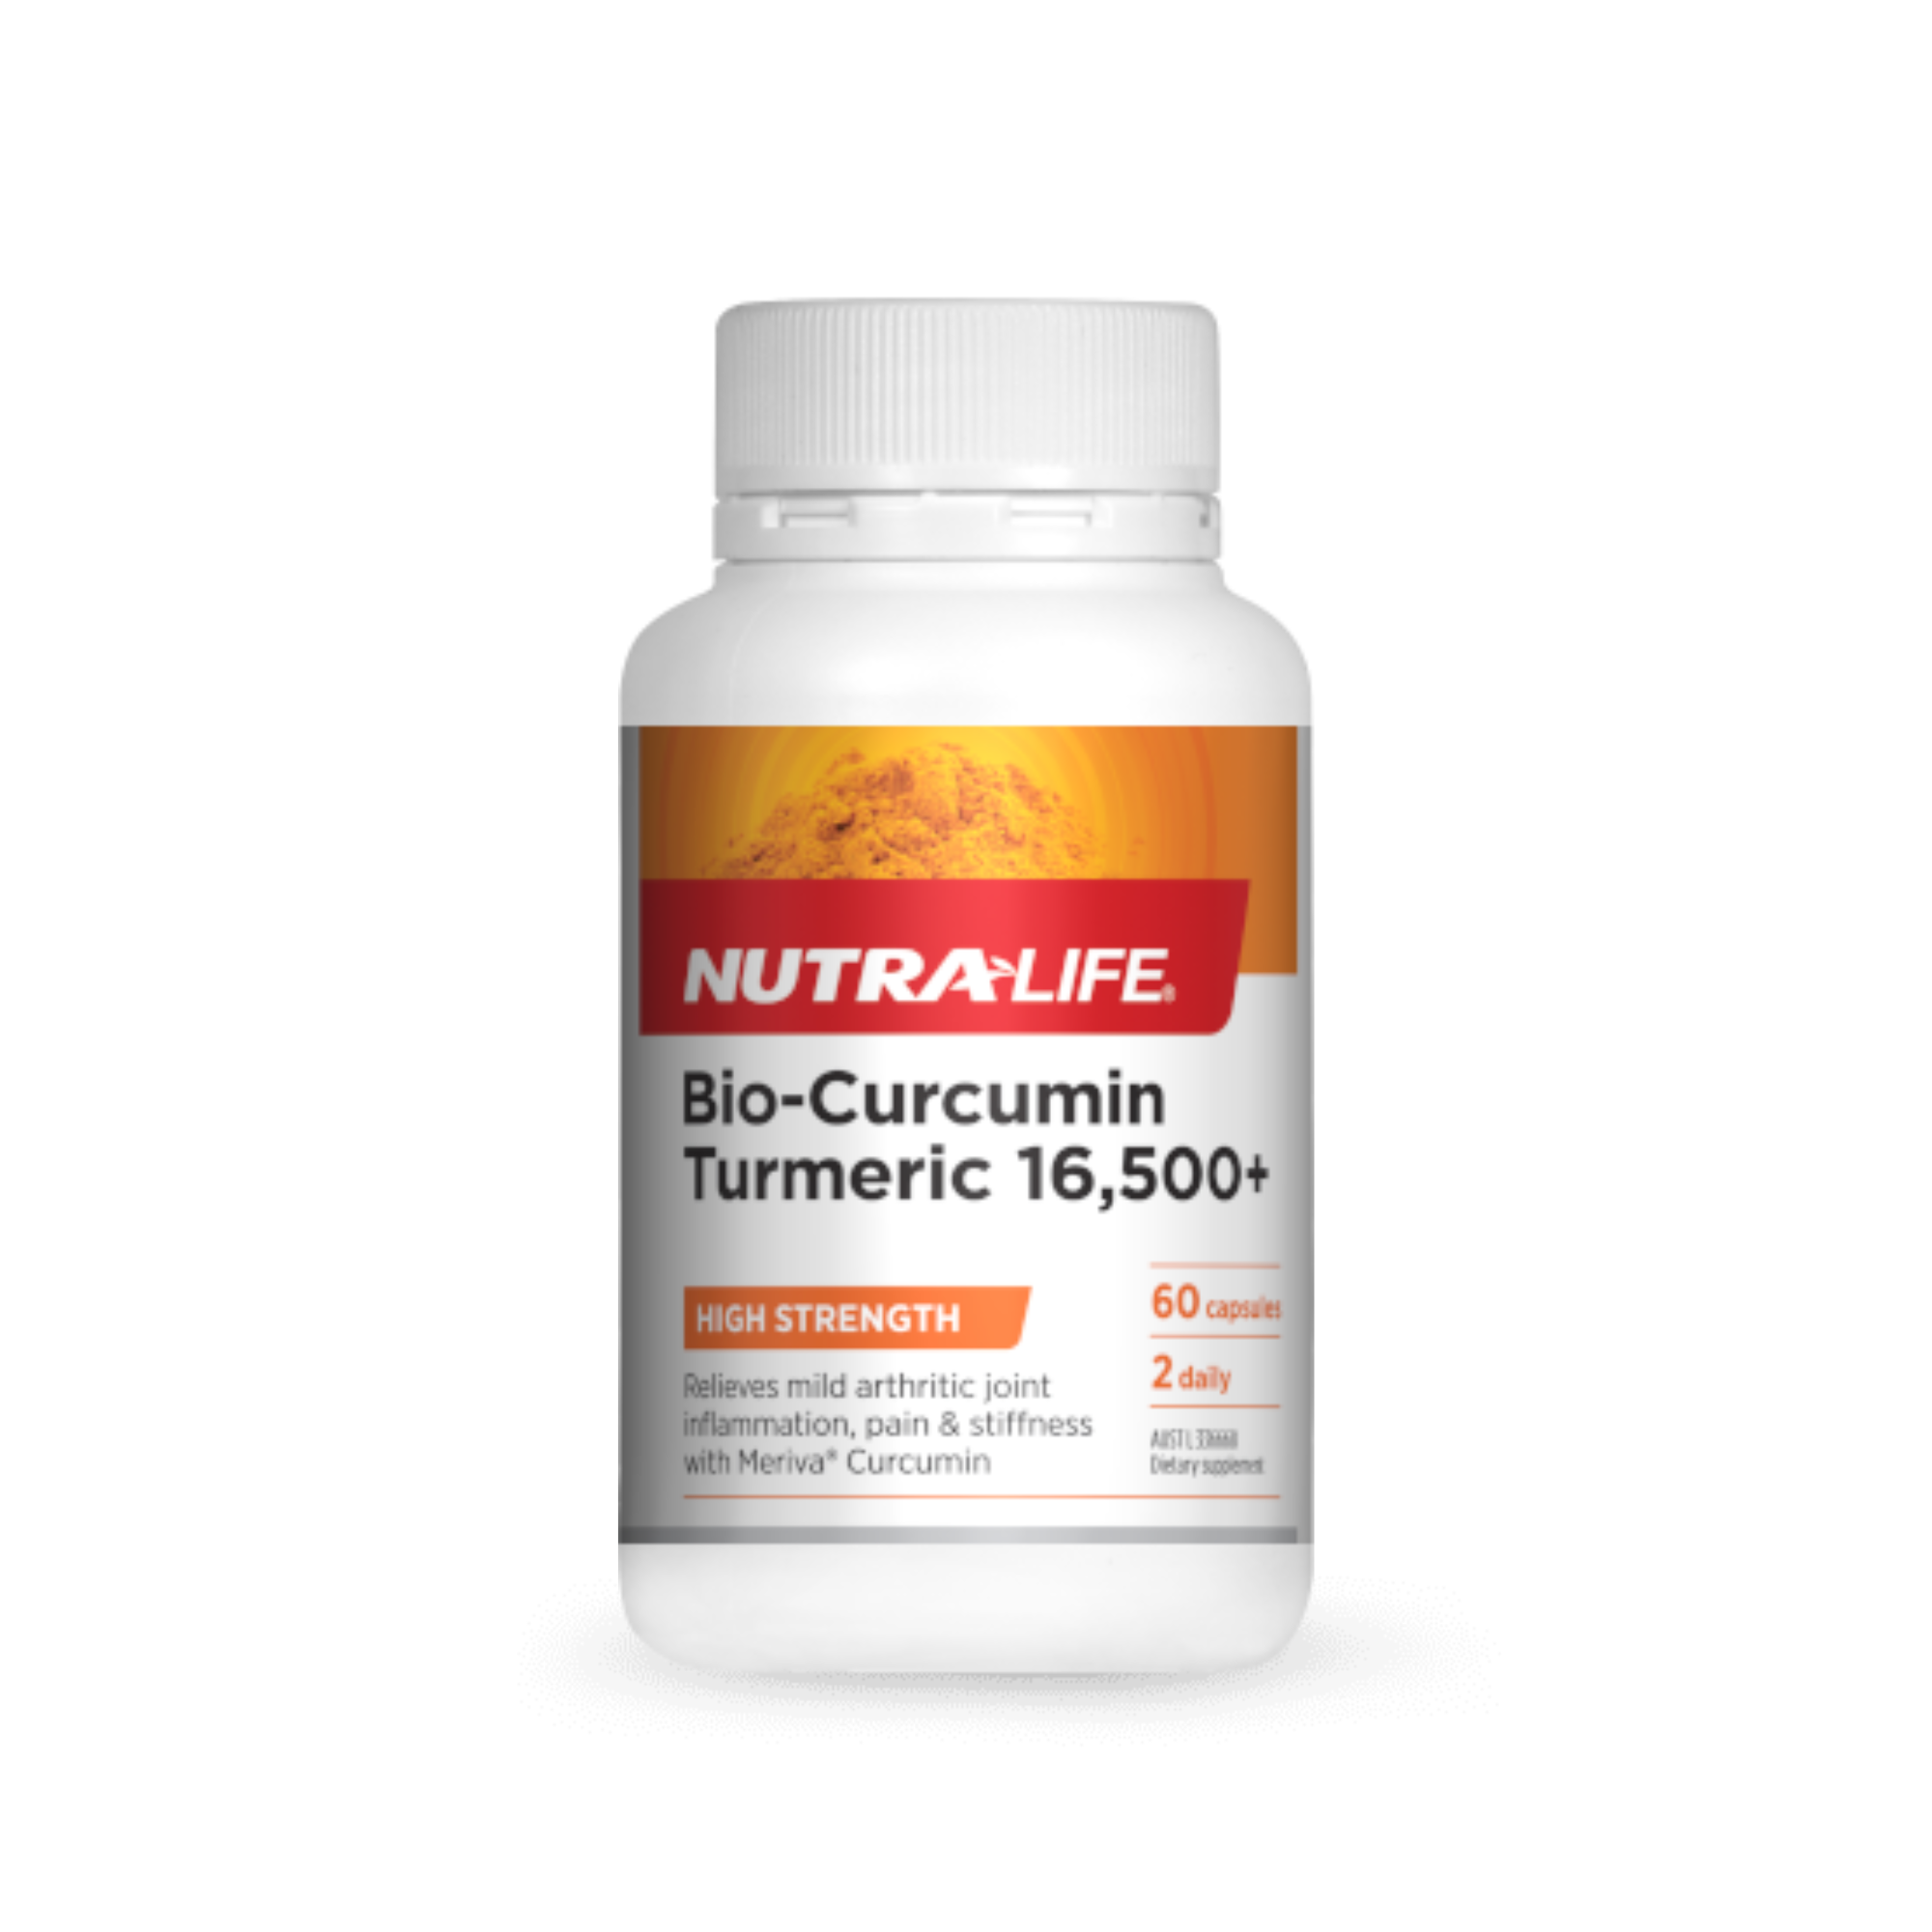 Nutralife Bio Curcumin Turmeric 16,500+ 60 Capsules